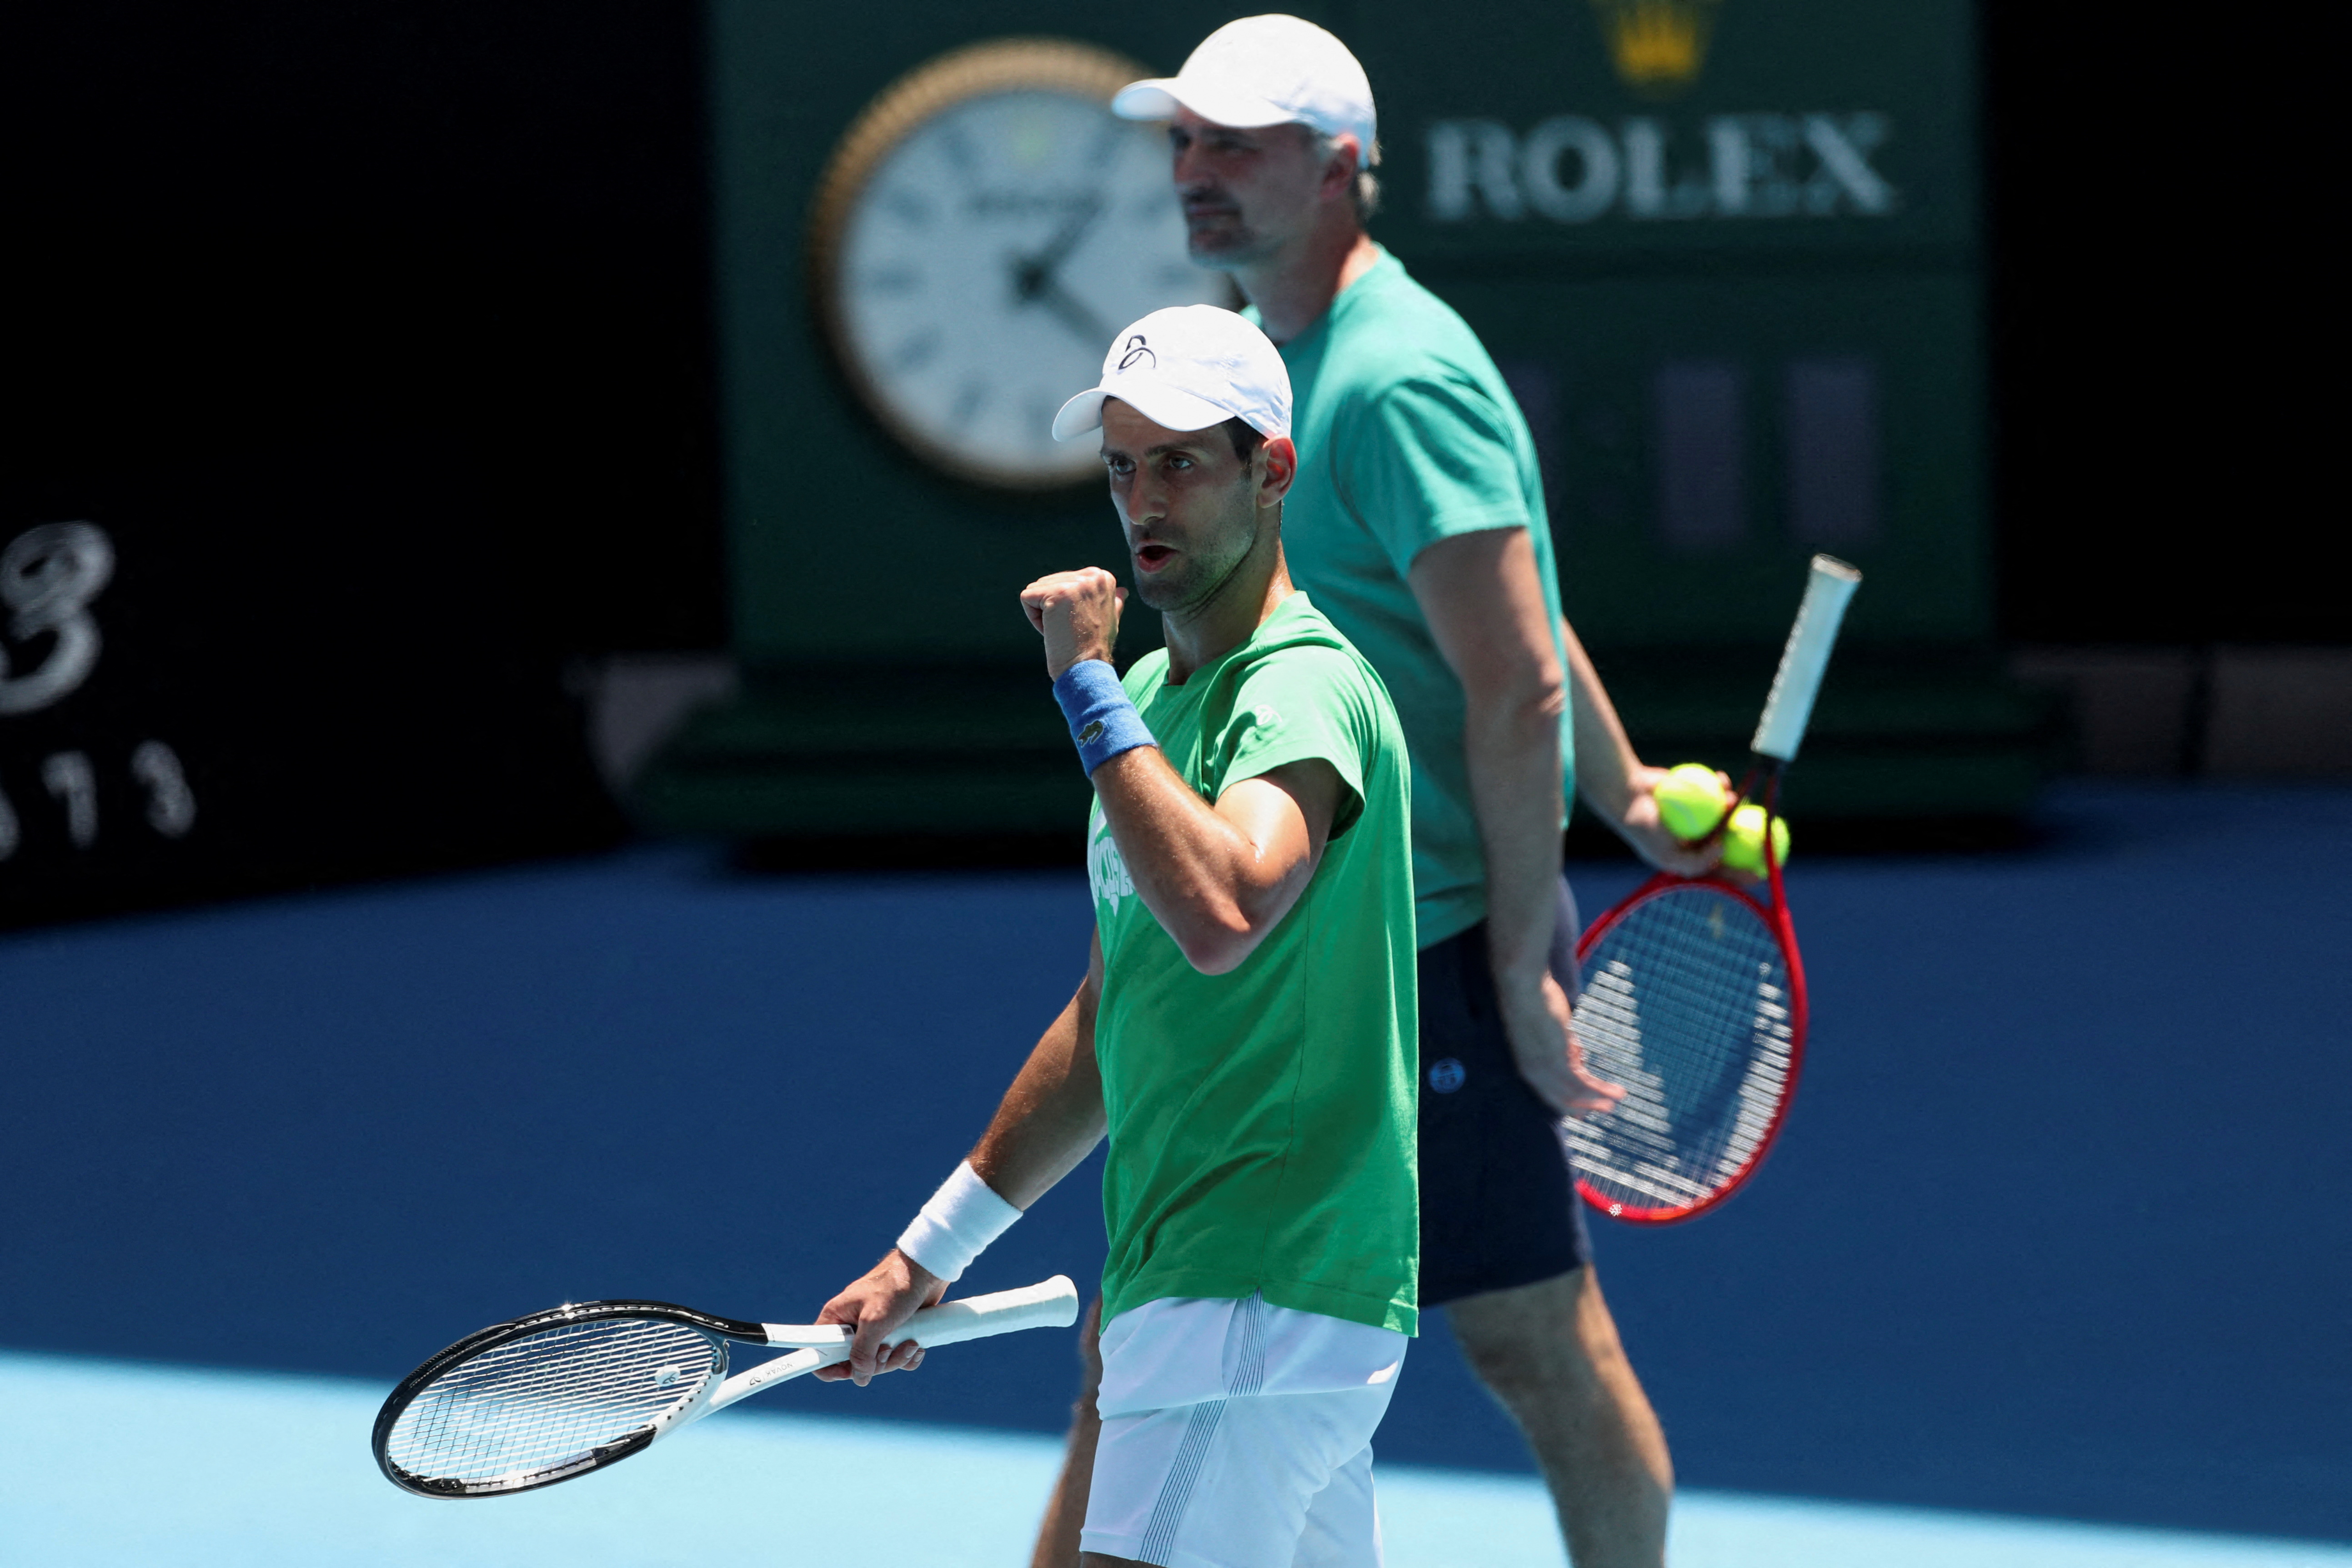 Djokovic practises for Australian Open as waits for visa ruling | Reuters